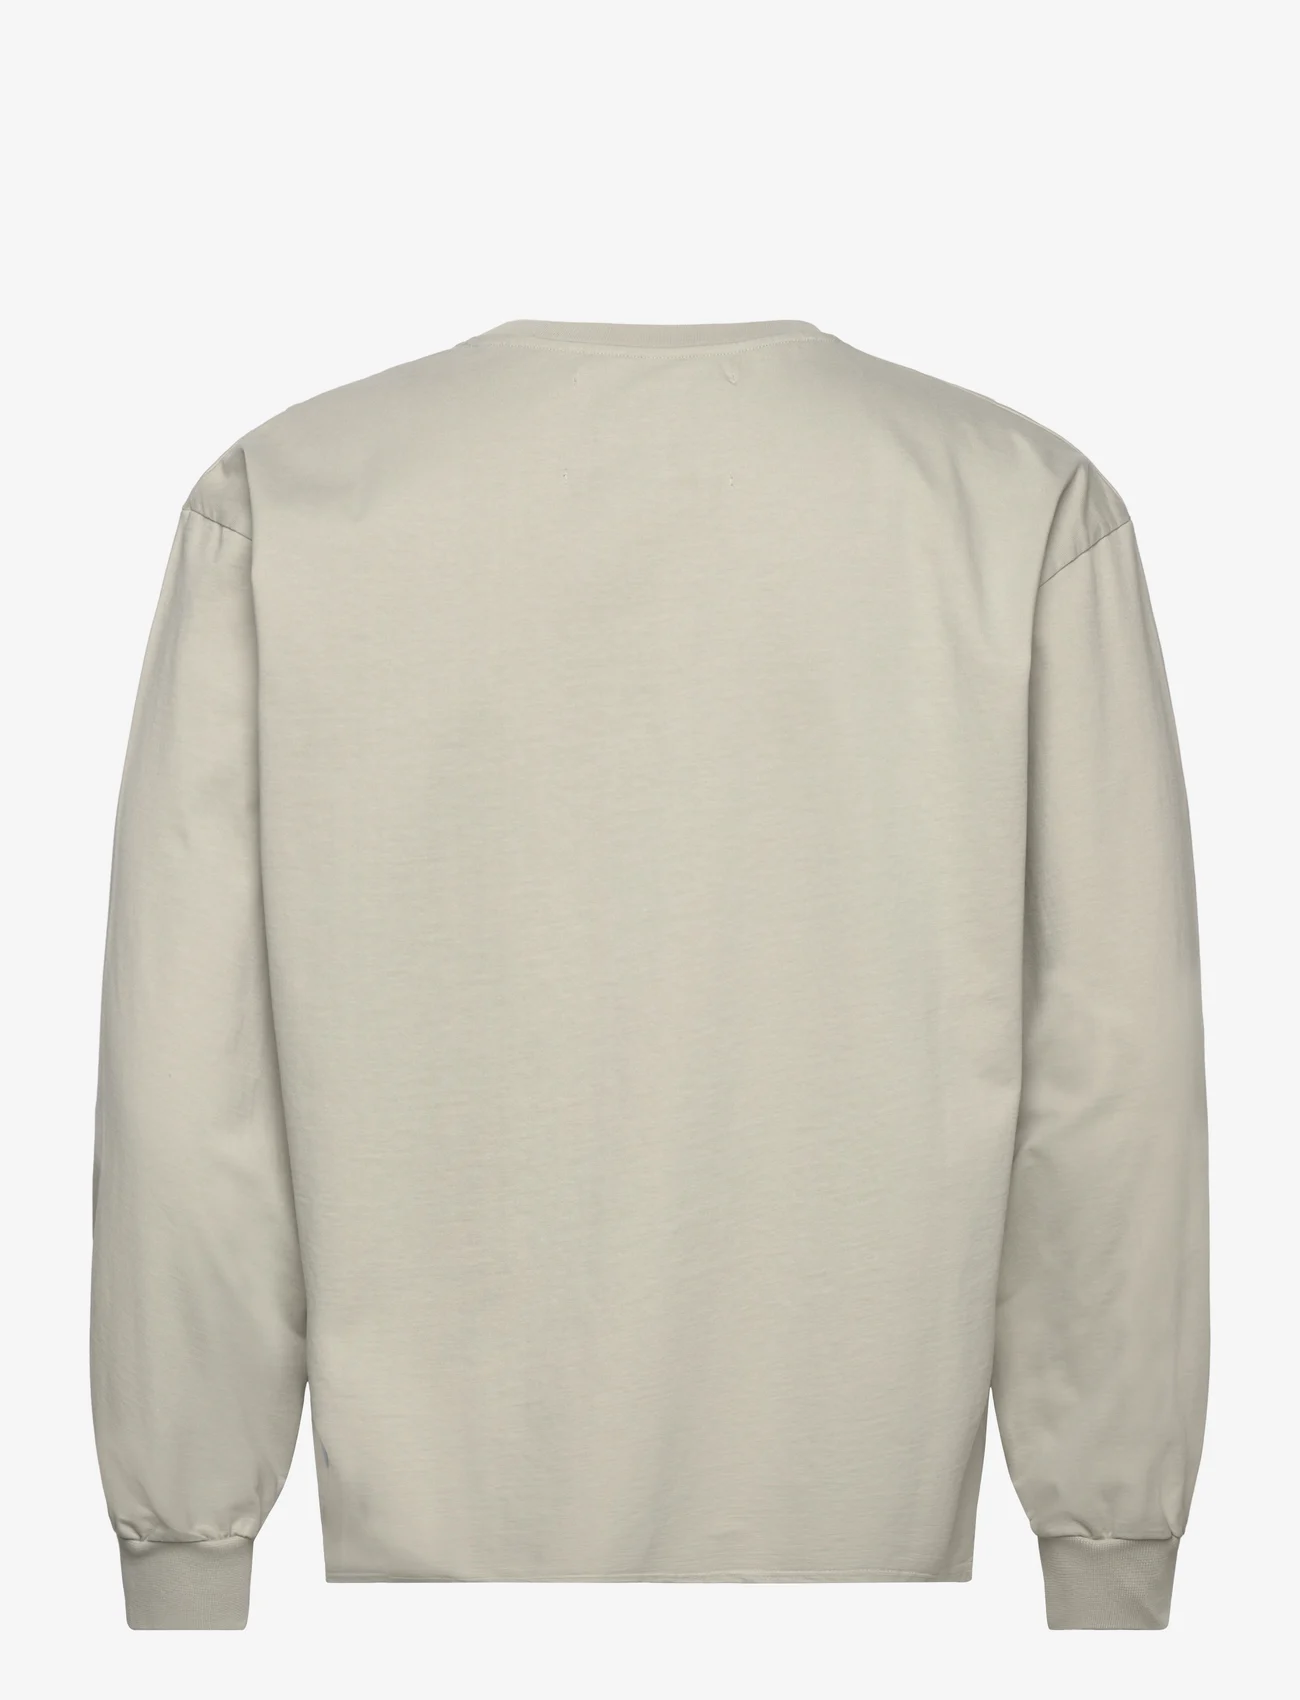 Garment Project - Heavy L/S Tee - Silver Birch - t-shirts - silver - 1